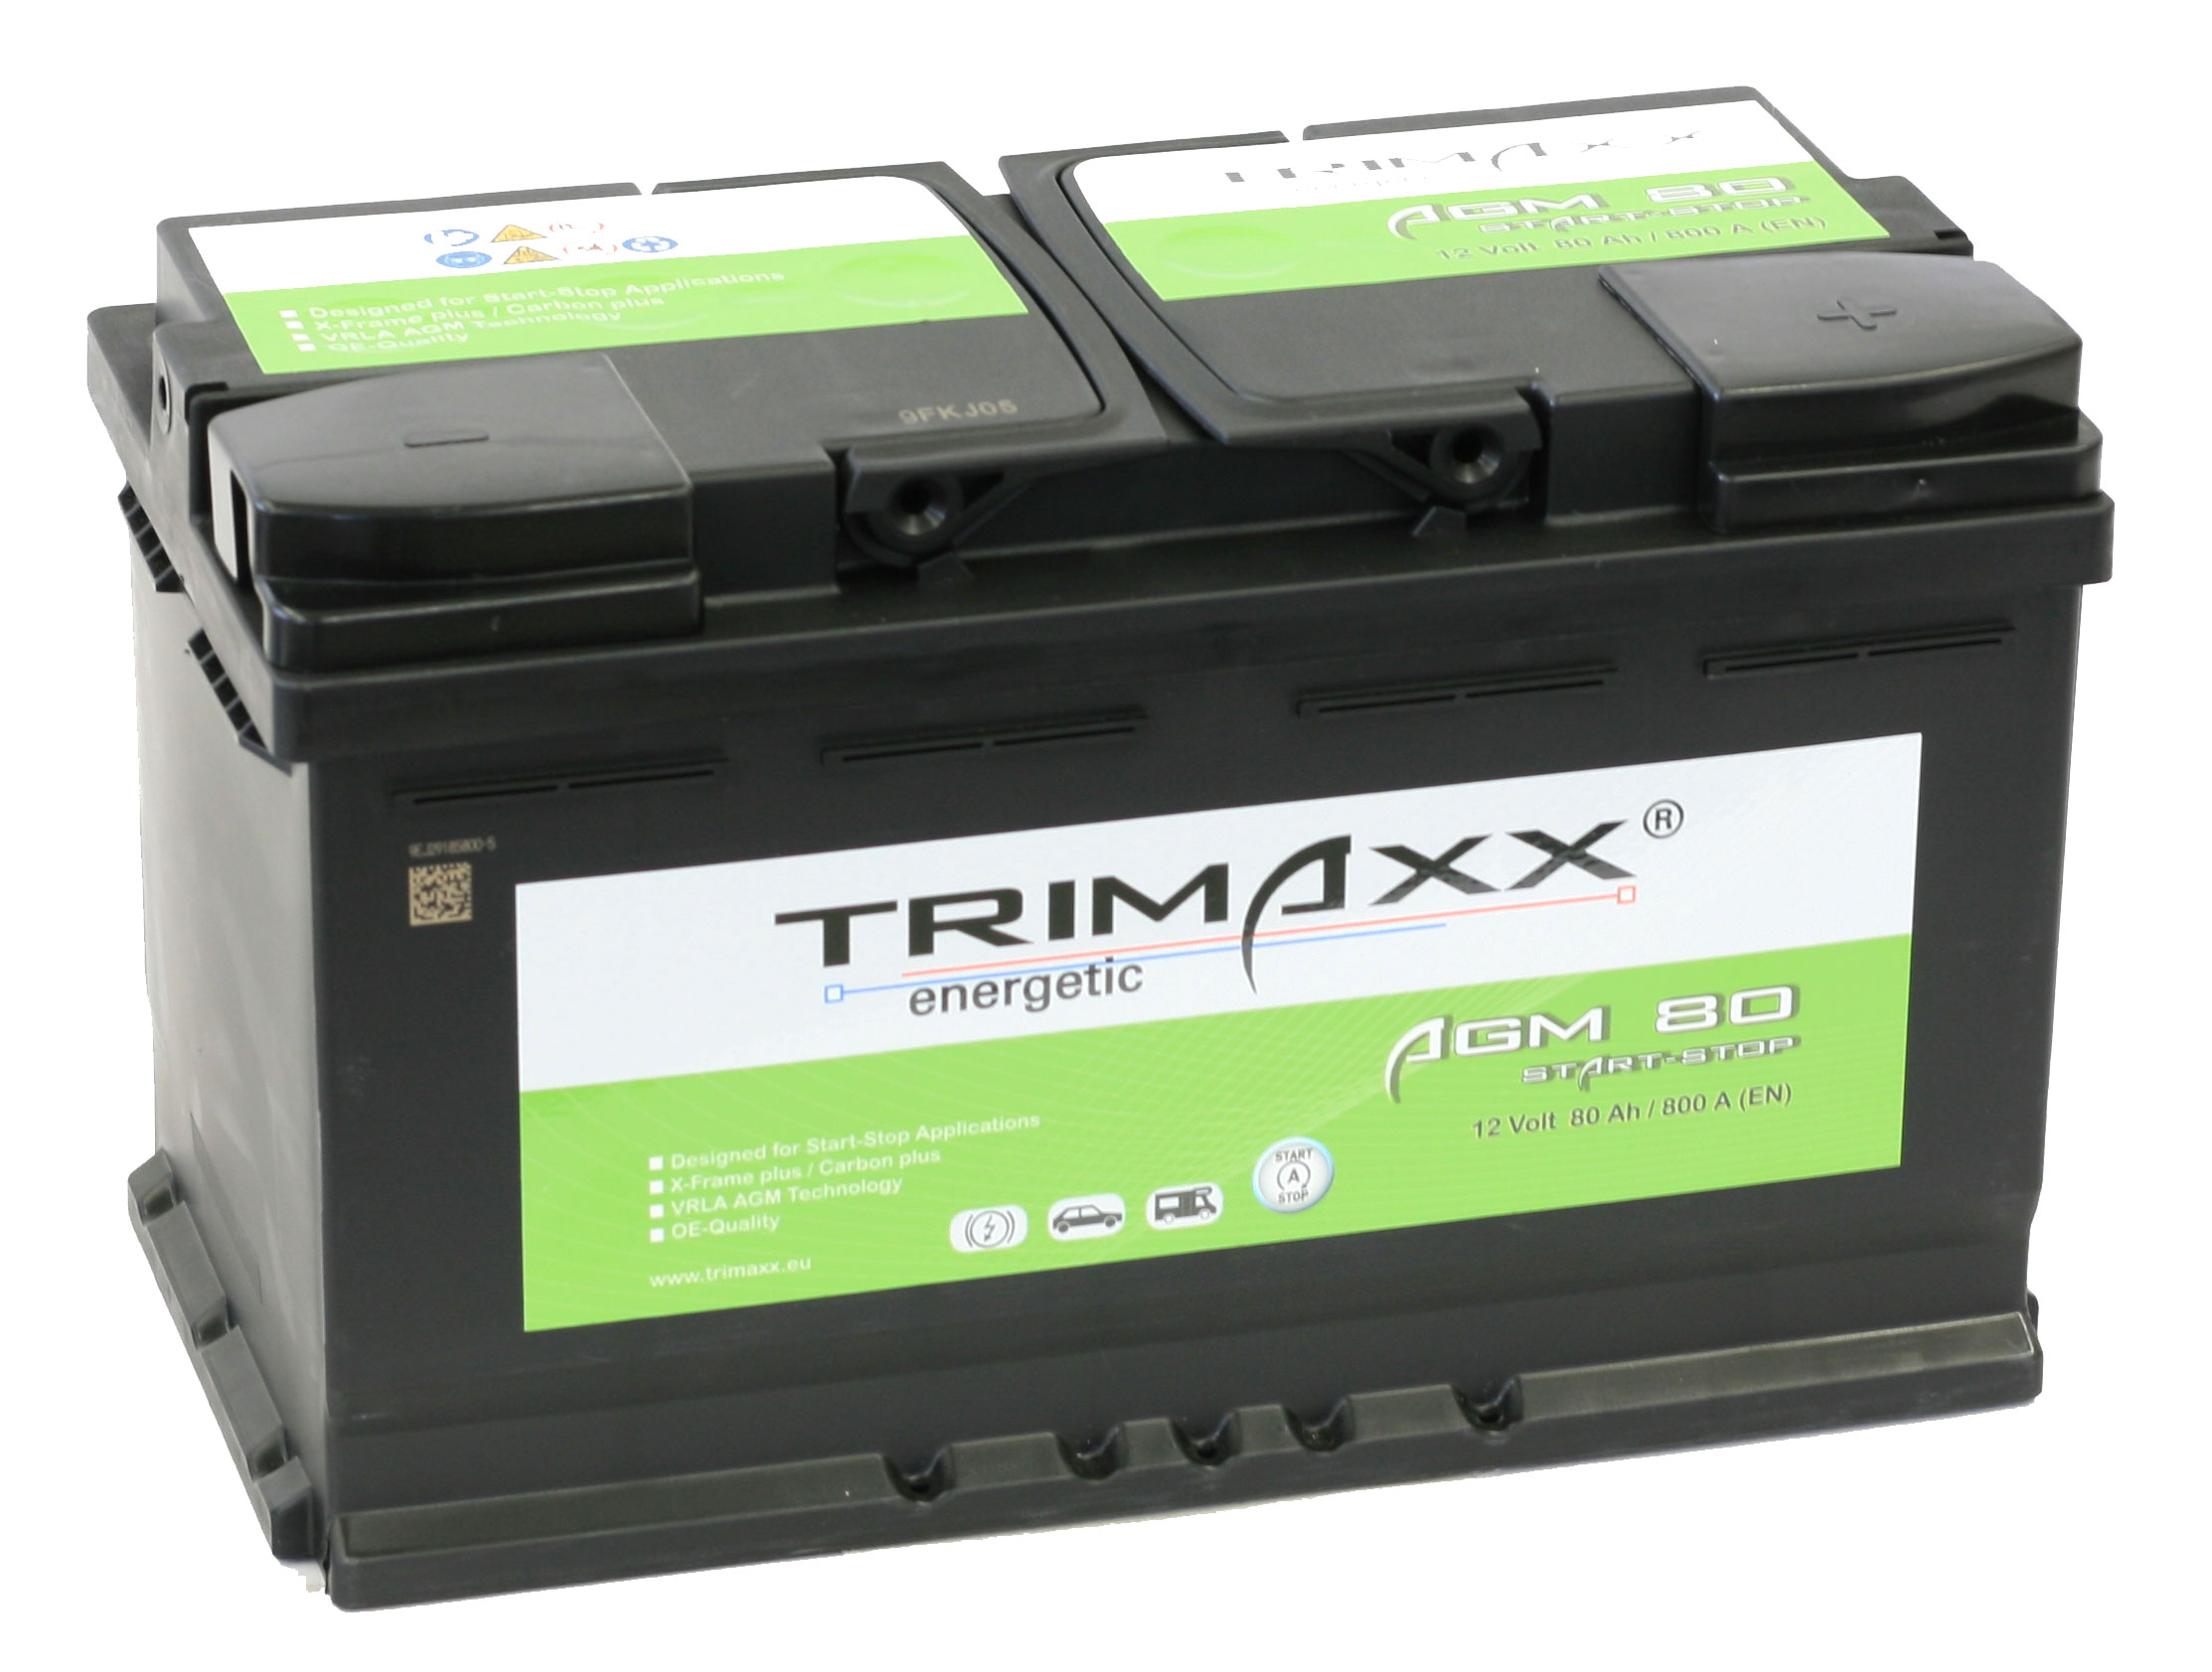 TRIMAXX energetic AGM 12V 80Ah 800A(EN)